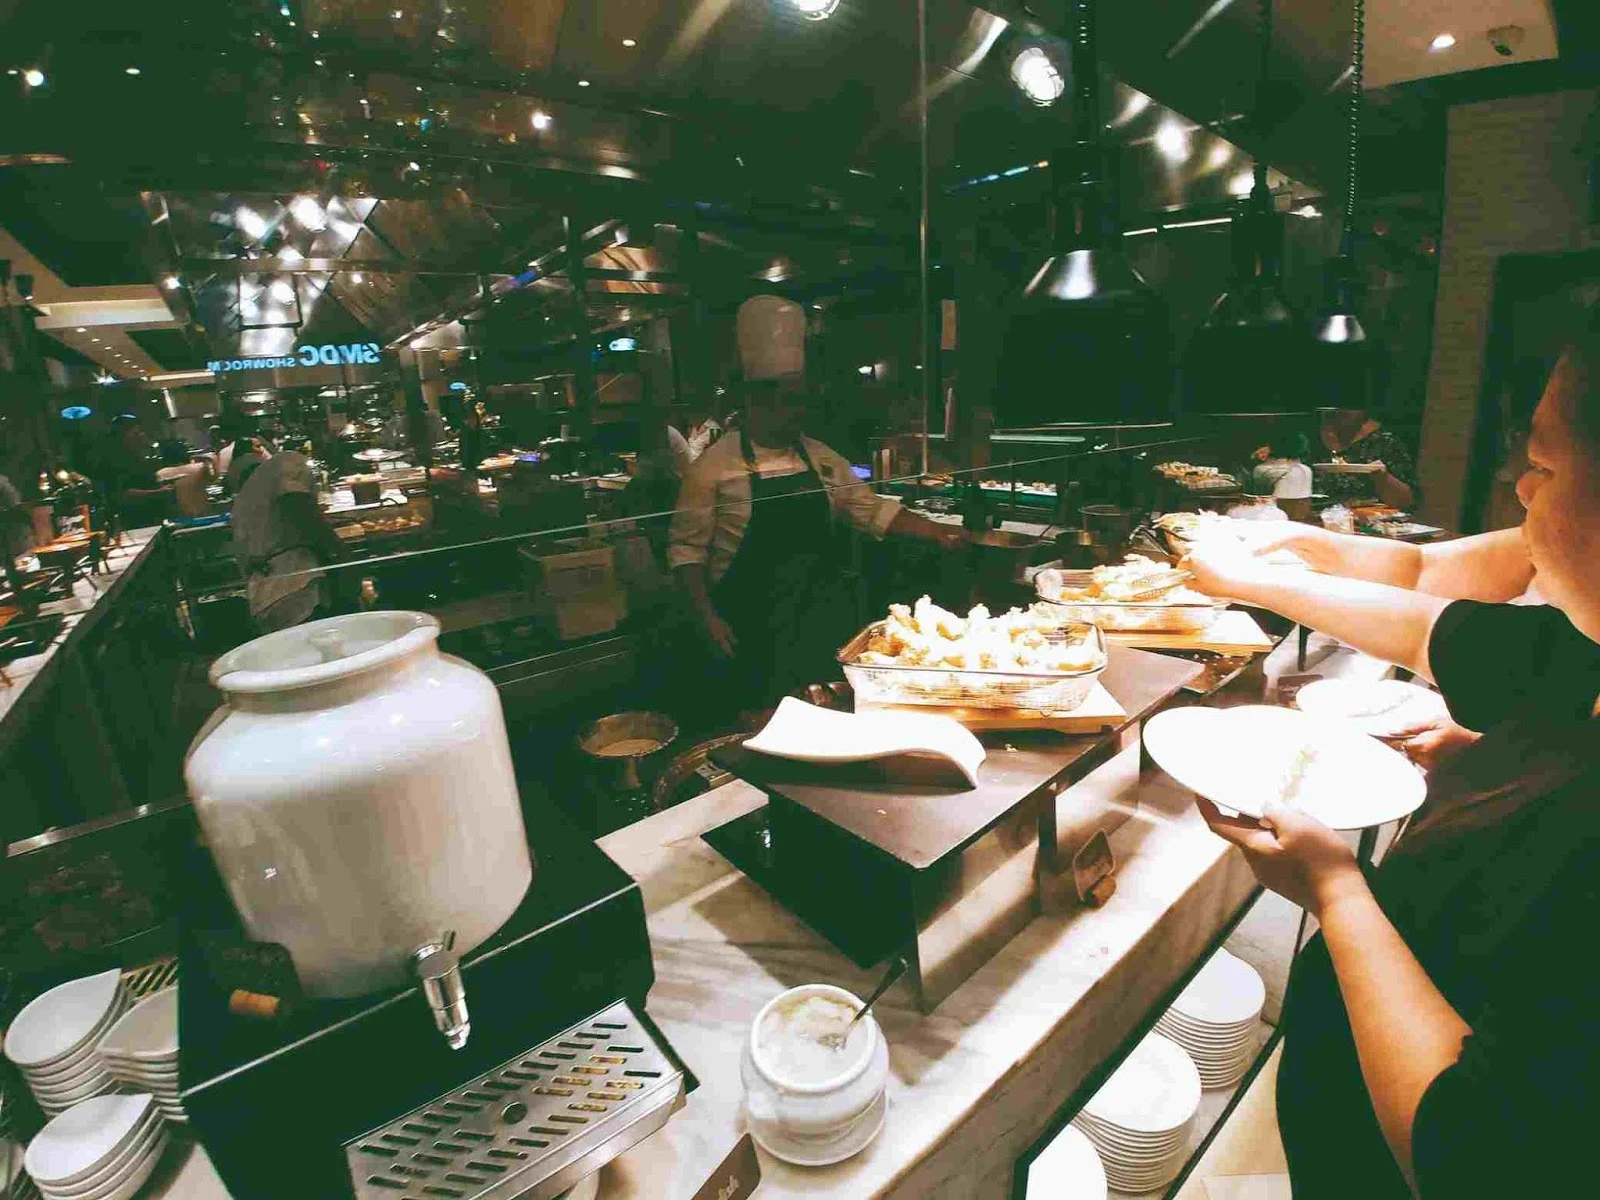 Vikings Luxury Buffet: Japanese food station